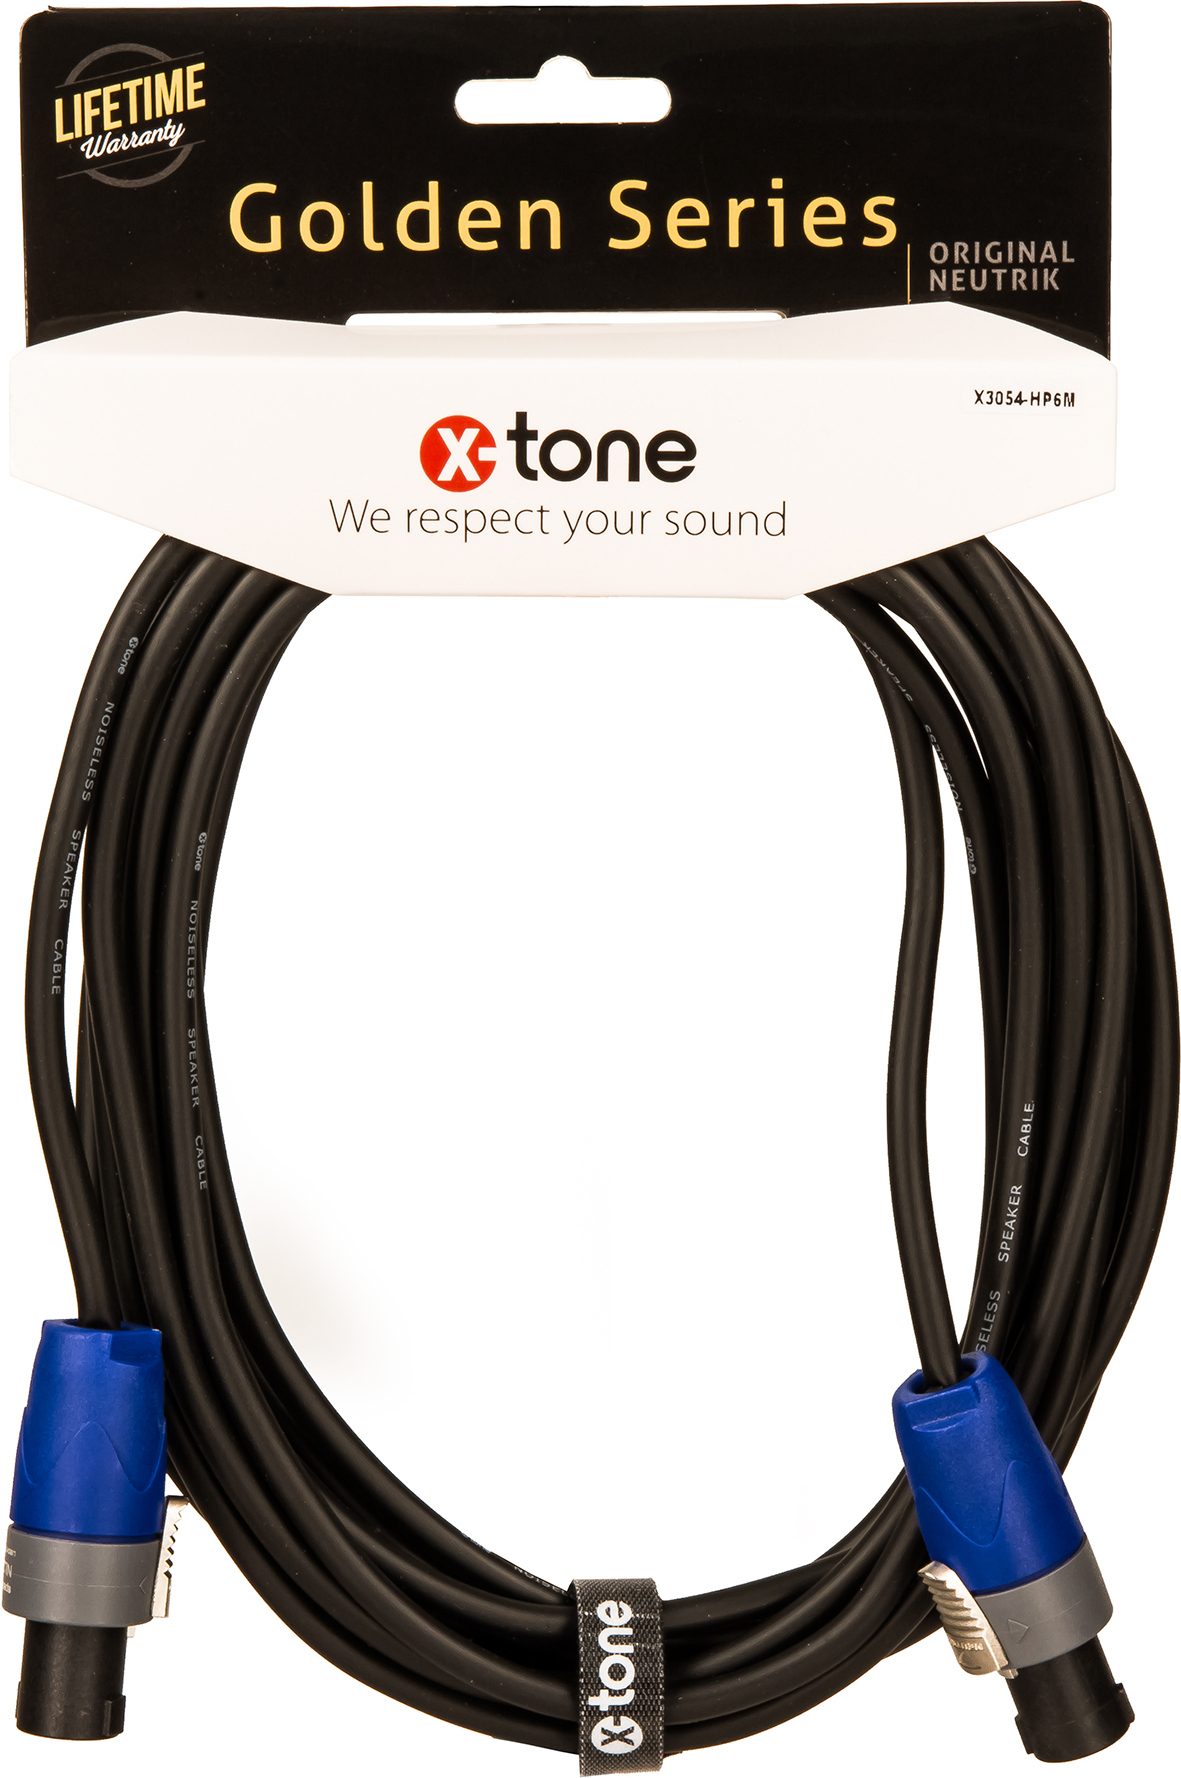 X-tone X3054-hp6m Speaker Cable Golden Series Neutrik Speakon 6m - CÂble - Main picture